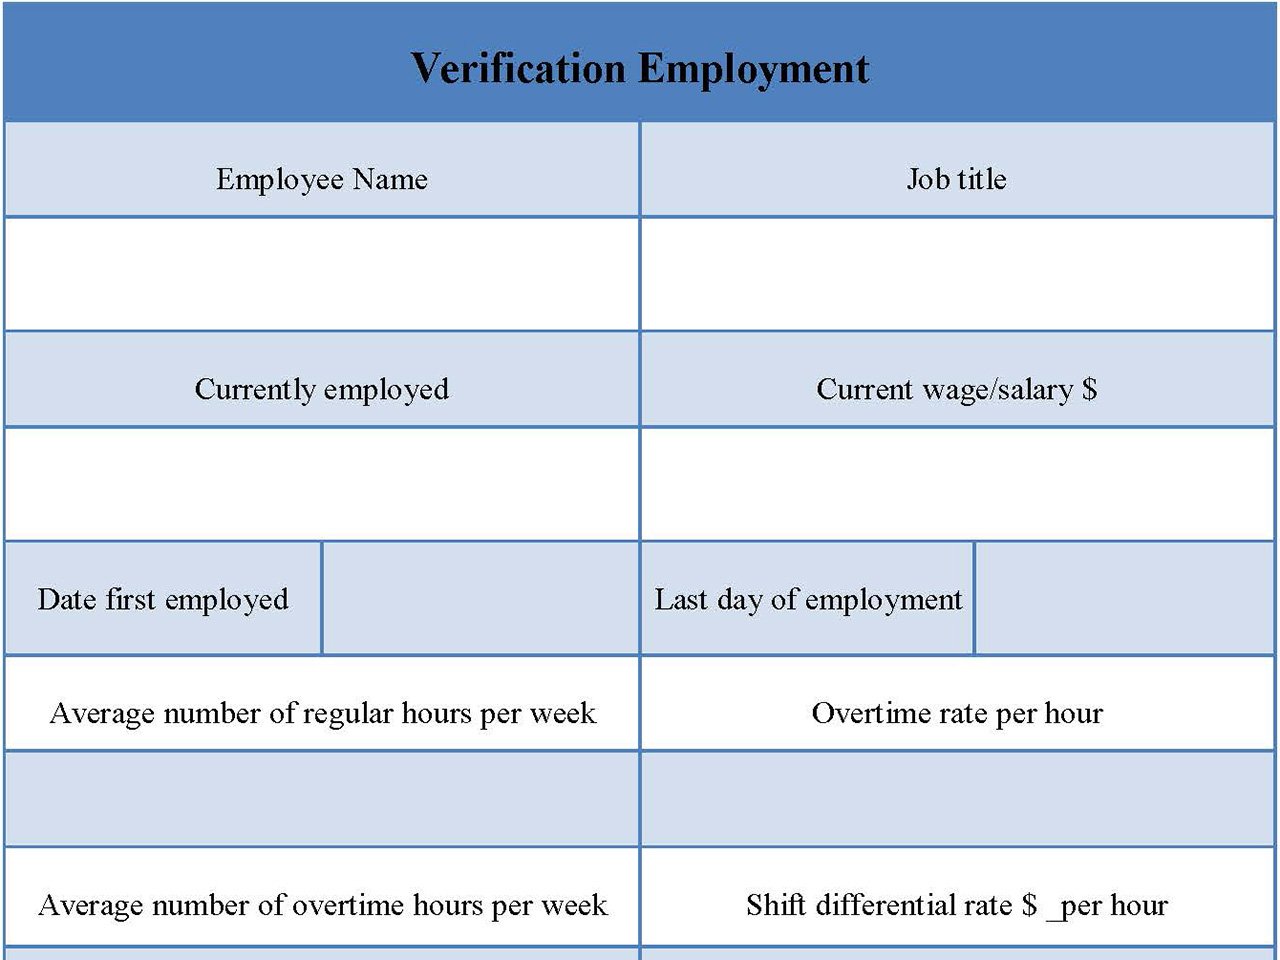 Verification Employment Form